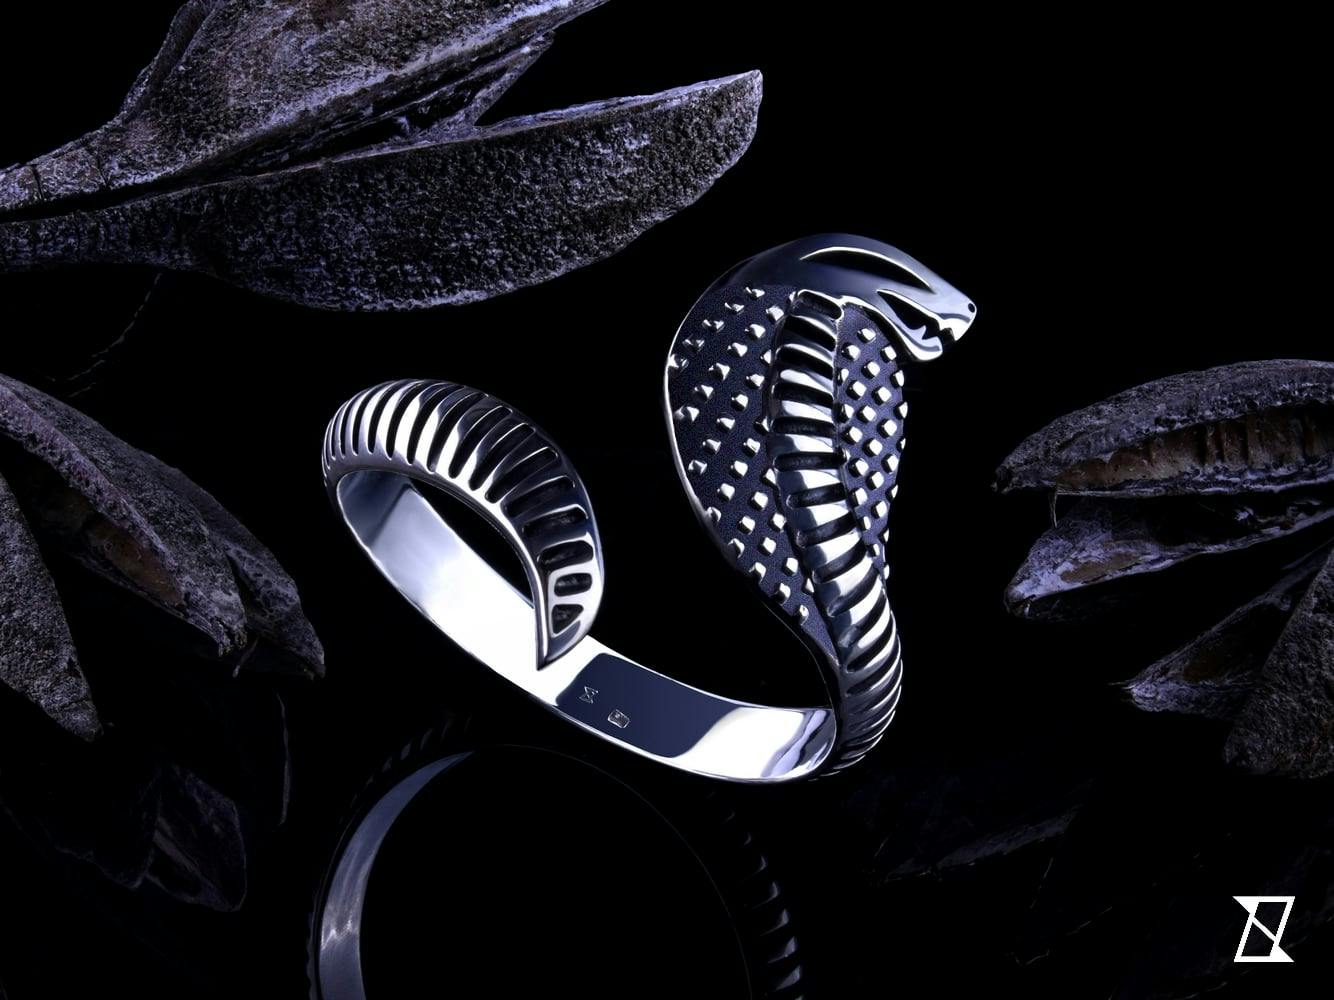 Bangle bracelet with cobra motif. 